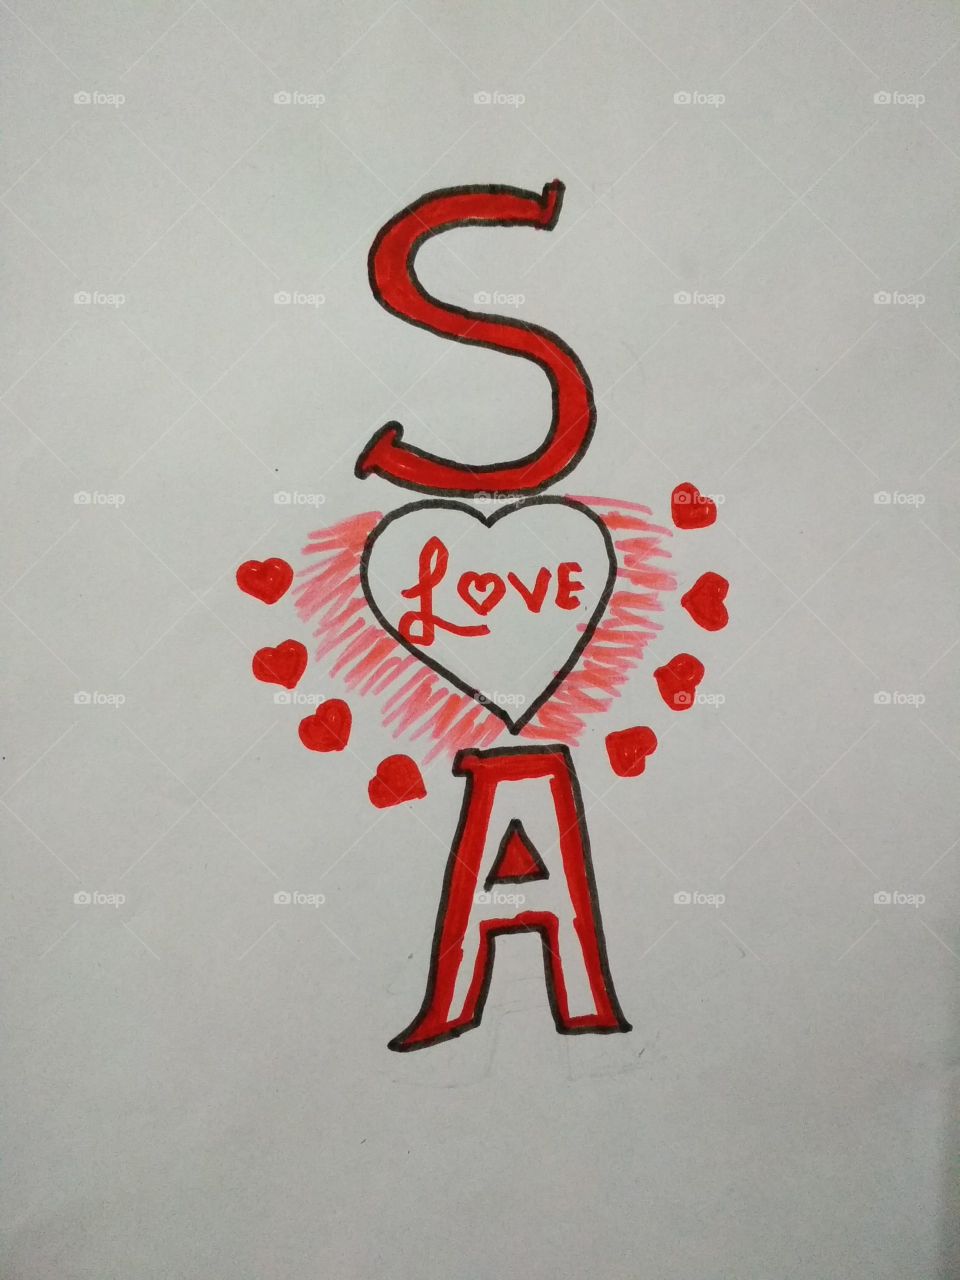 S loves A